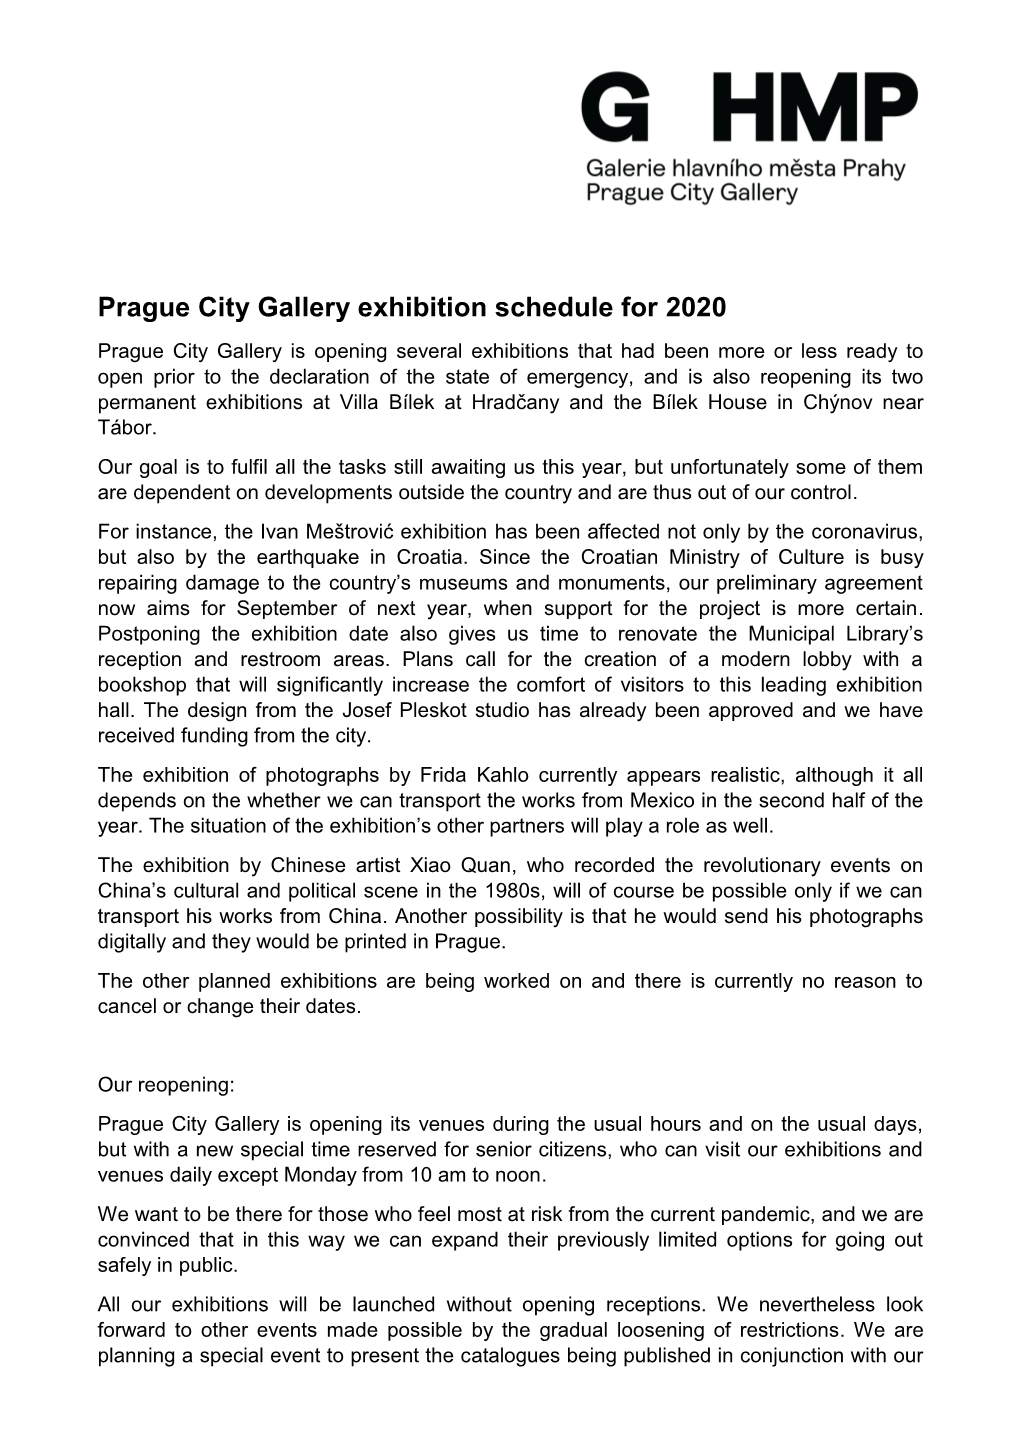 2020 Exhibition Plan